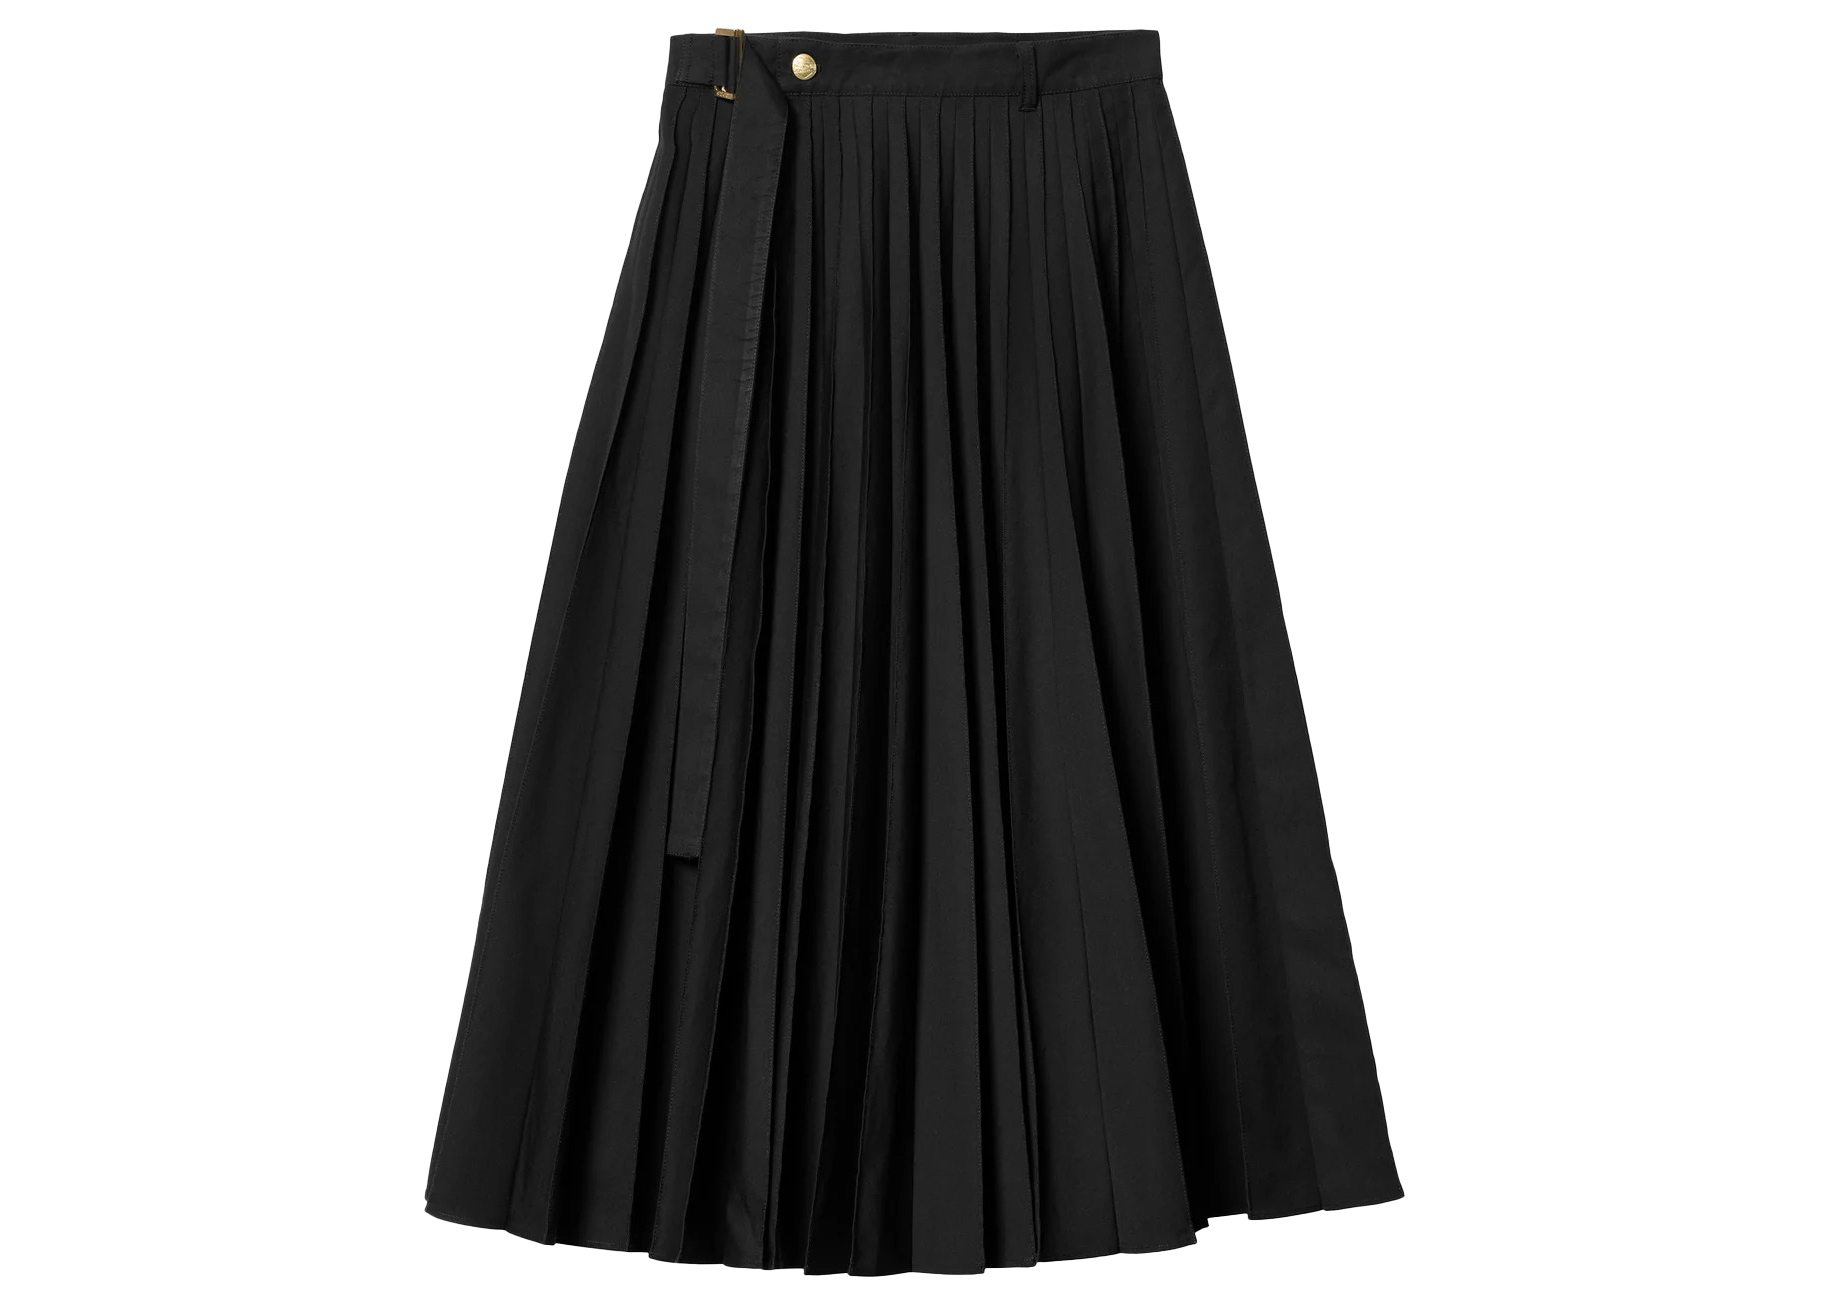 Sacai x Carhartt WIP Women's Pleated Skirt Beige - FW23 - US